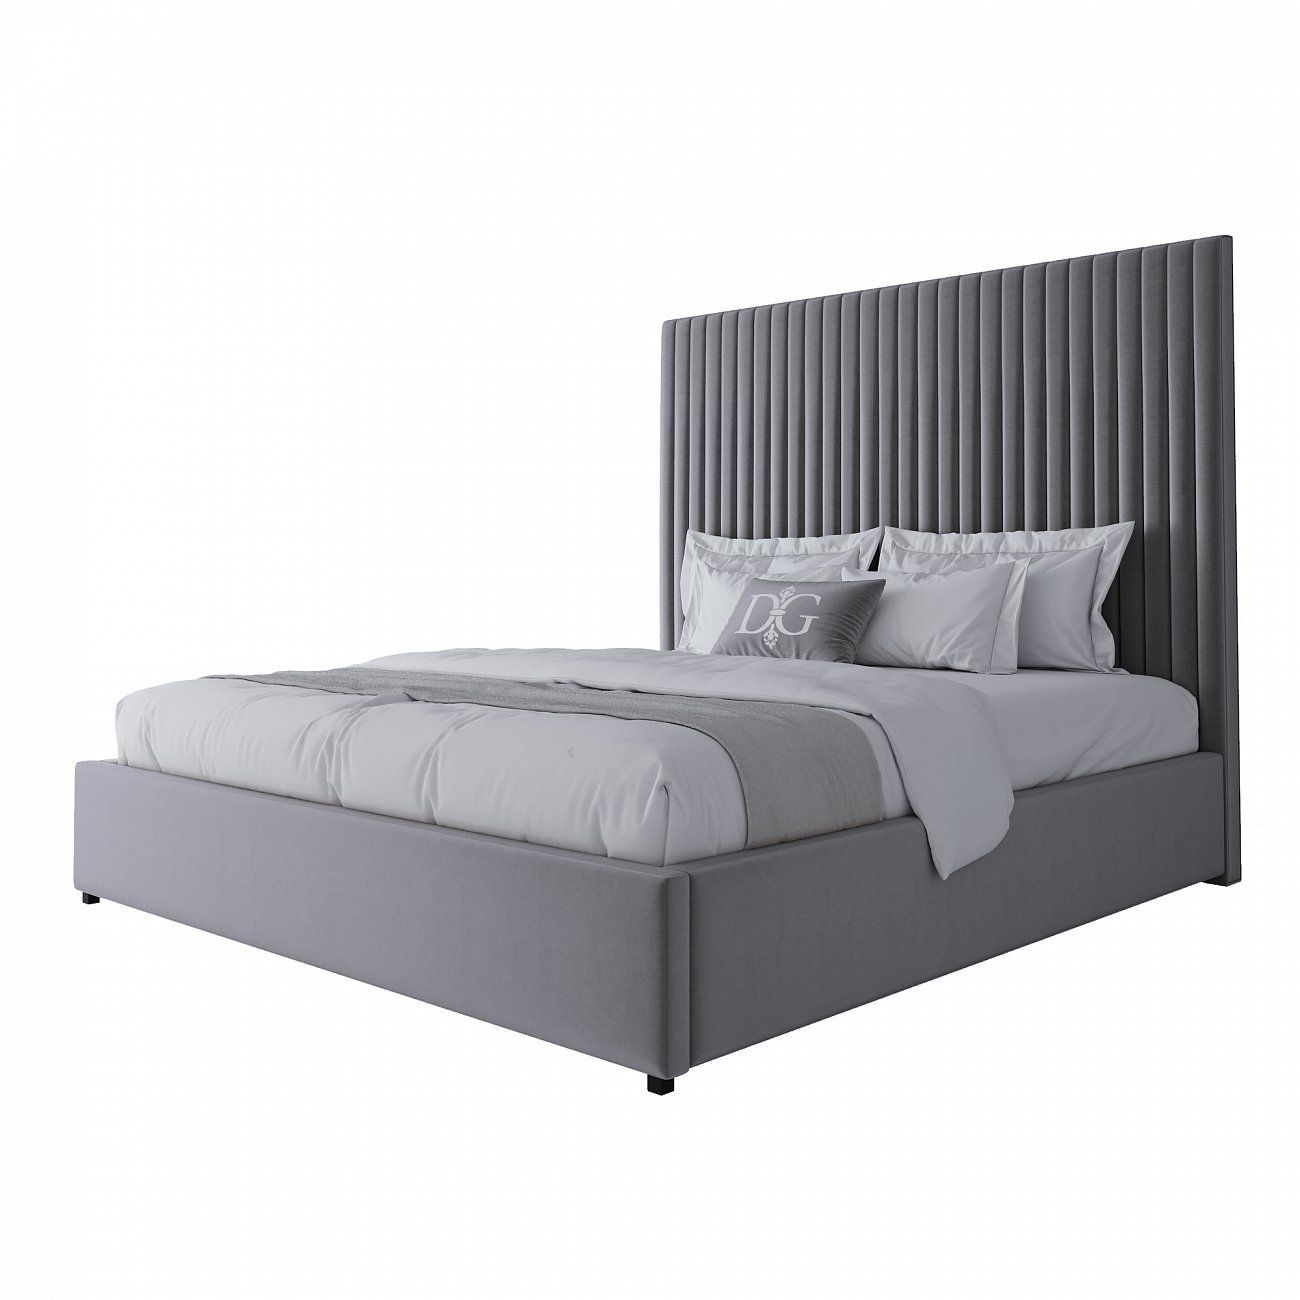 Mora double bed 180x200 grey